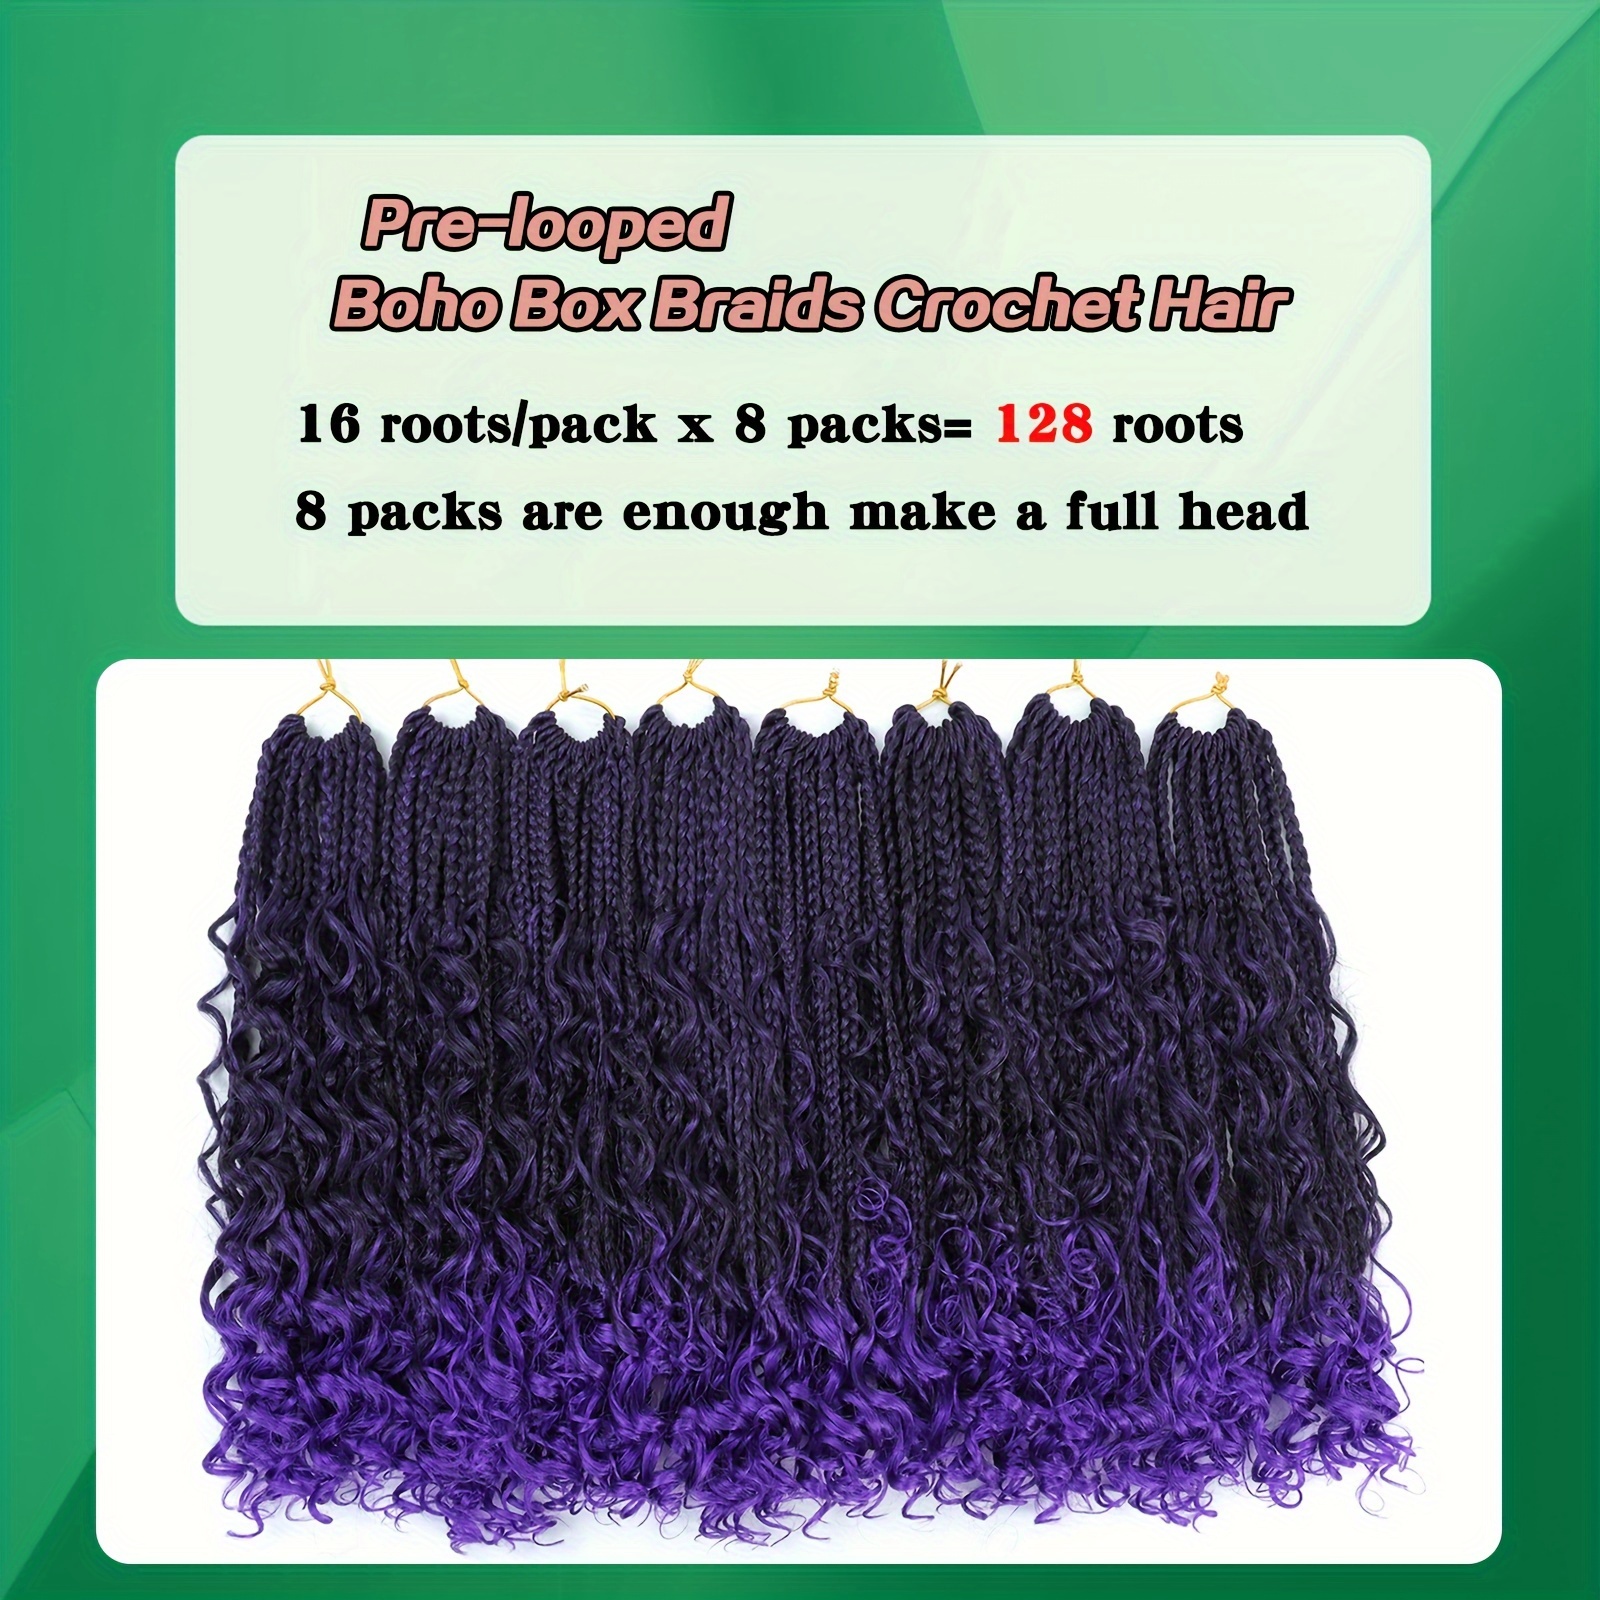 8 Packs Goddess Box Braids Crochet Hair 10 Inch Pre-looped